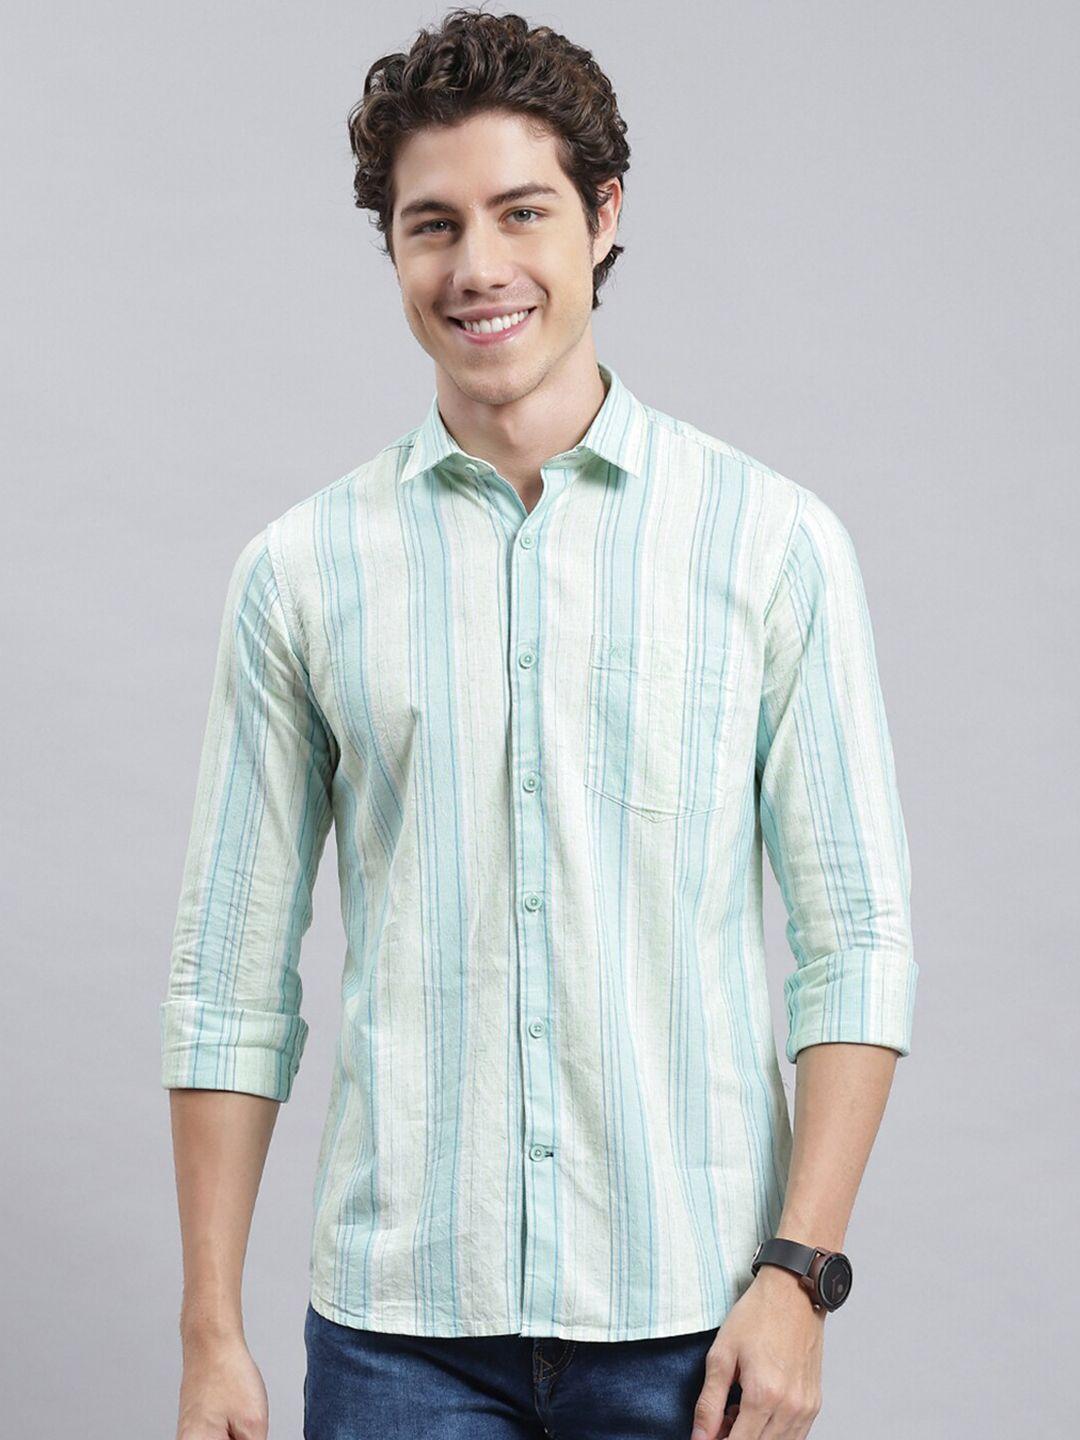 monte-carlo-classic-opaque-striped-casual-shirt